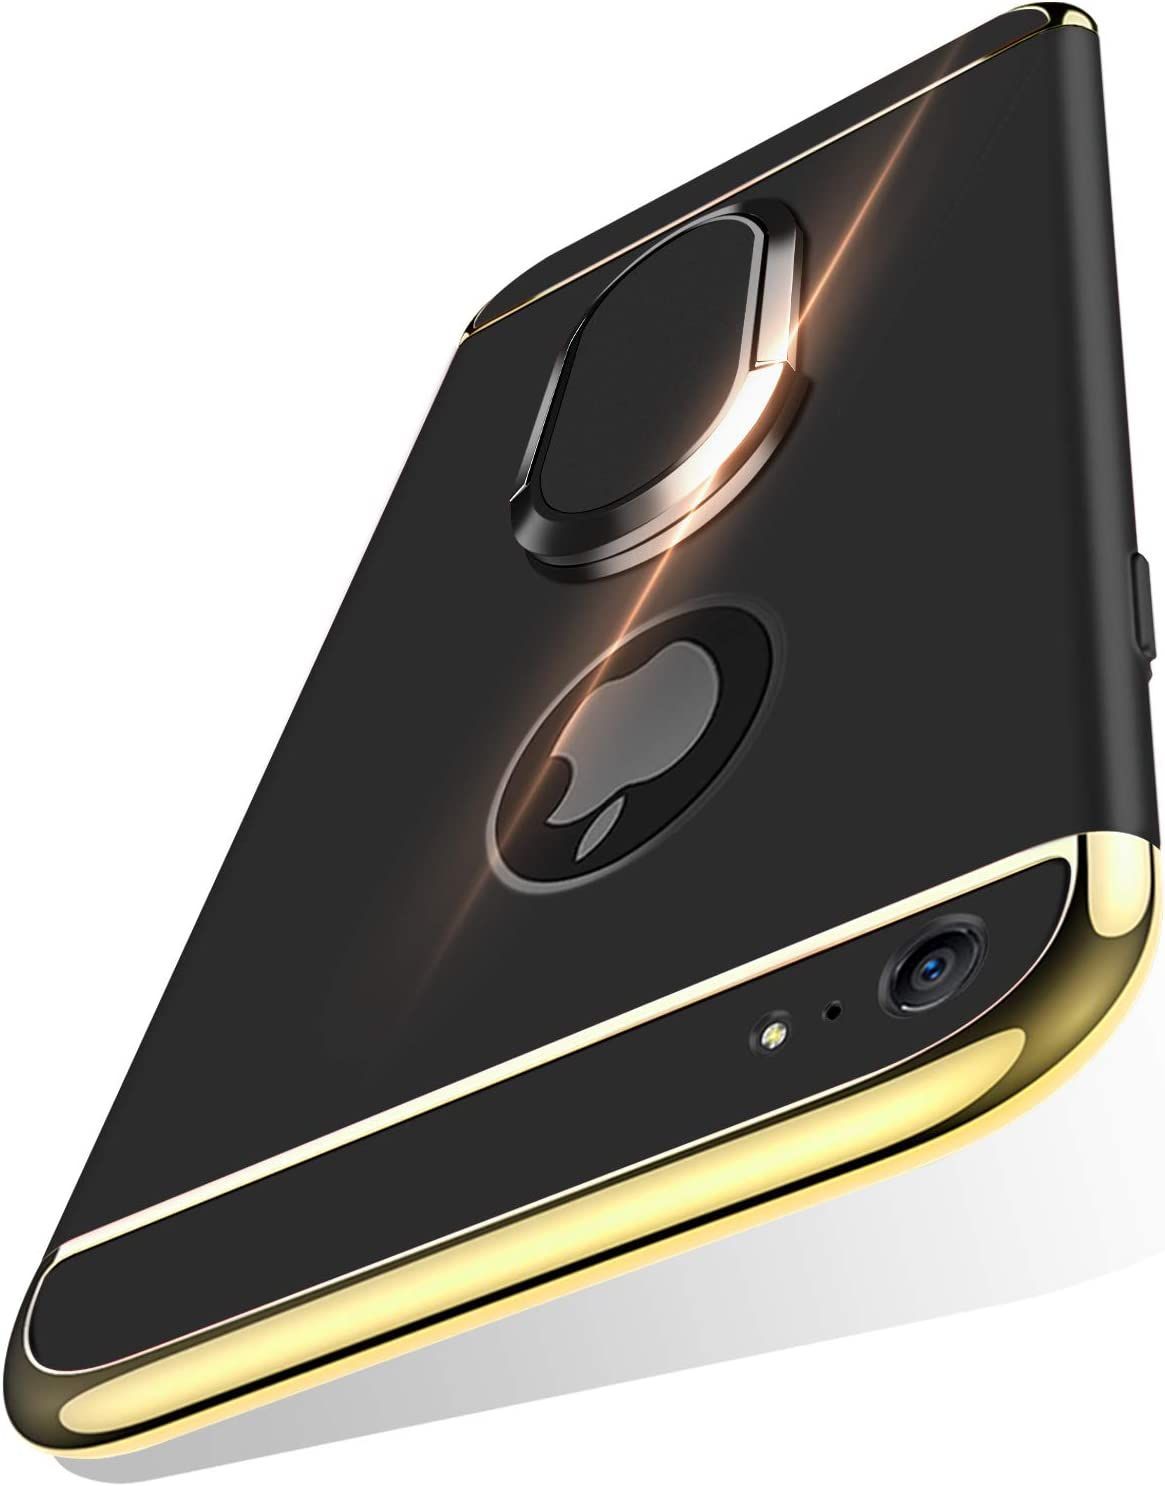 ☆ iPhone6s Plus ケース iPhone6 P 型 携帯カバー ストラップホール付き 黒 YZ48-26 2608 メルカリShops